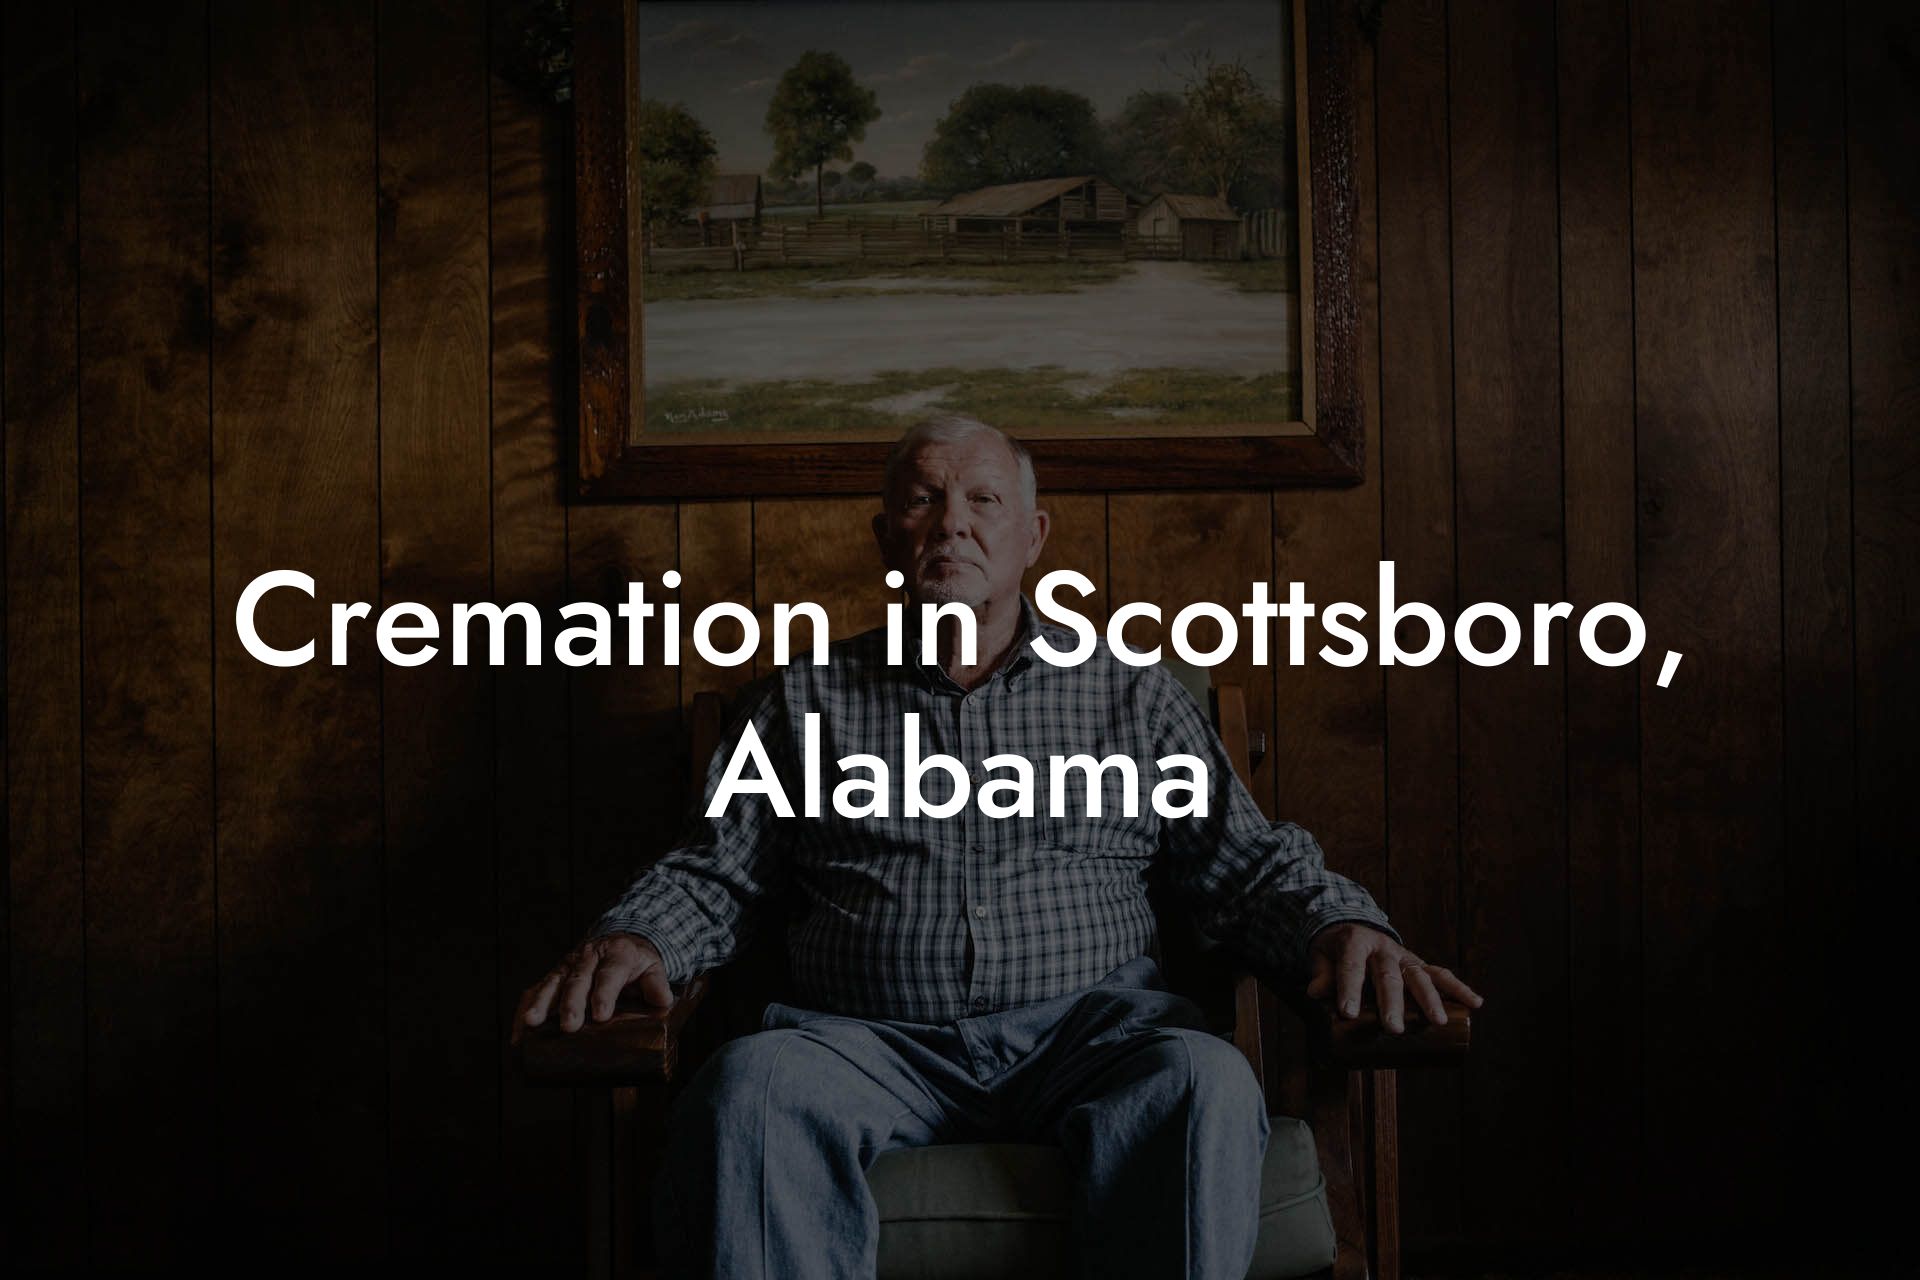 Cremation in Scottsboro, Alabama